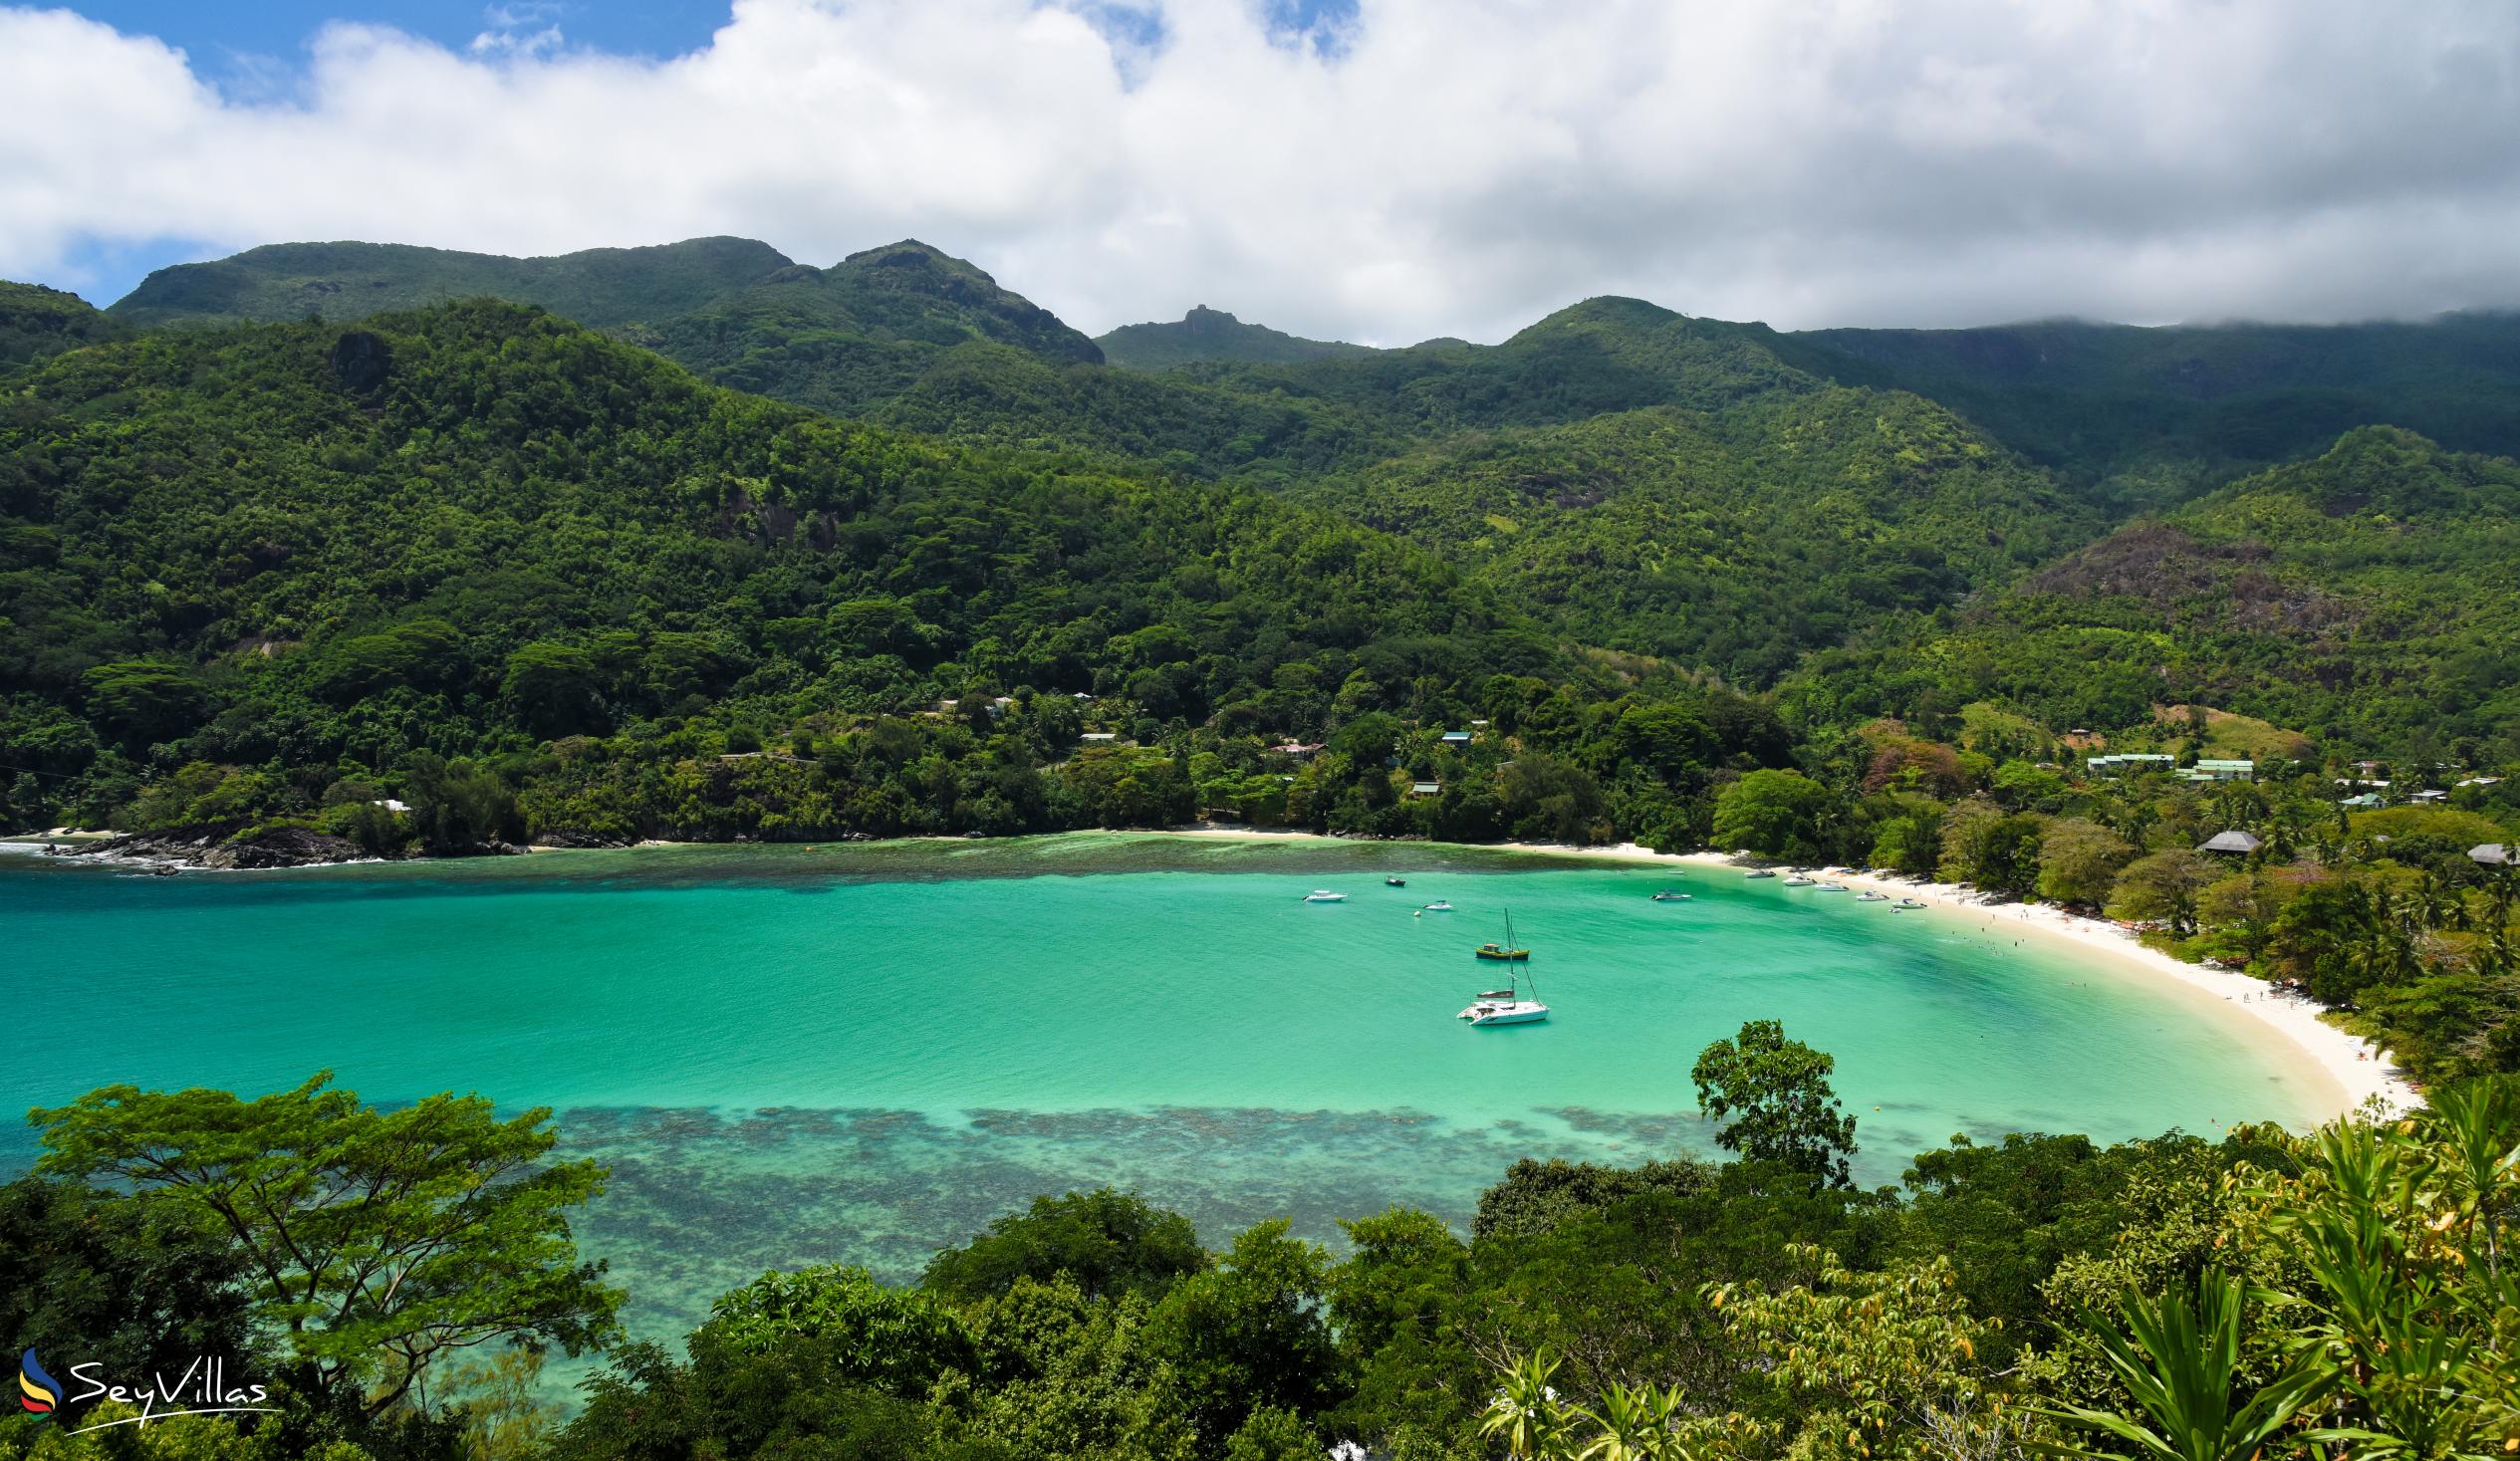 Photo 1: Port Launay North Beach - Mahé (Seychelles)